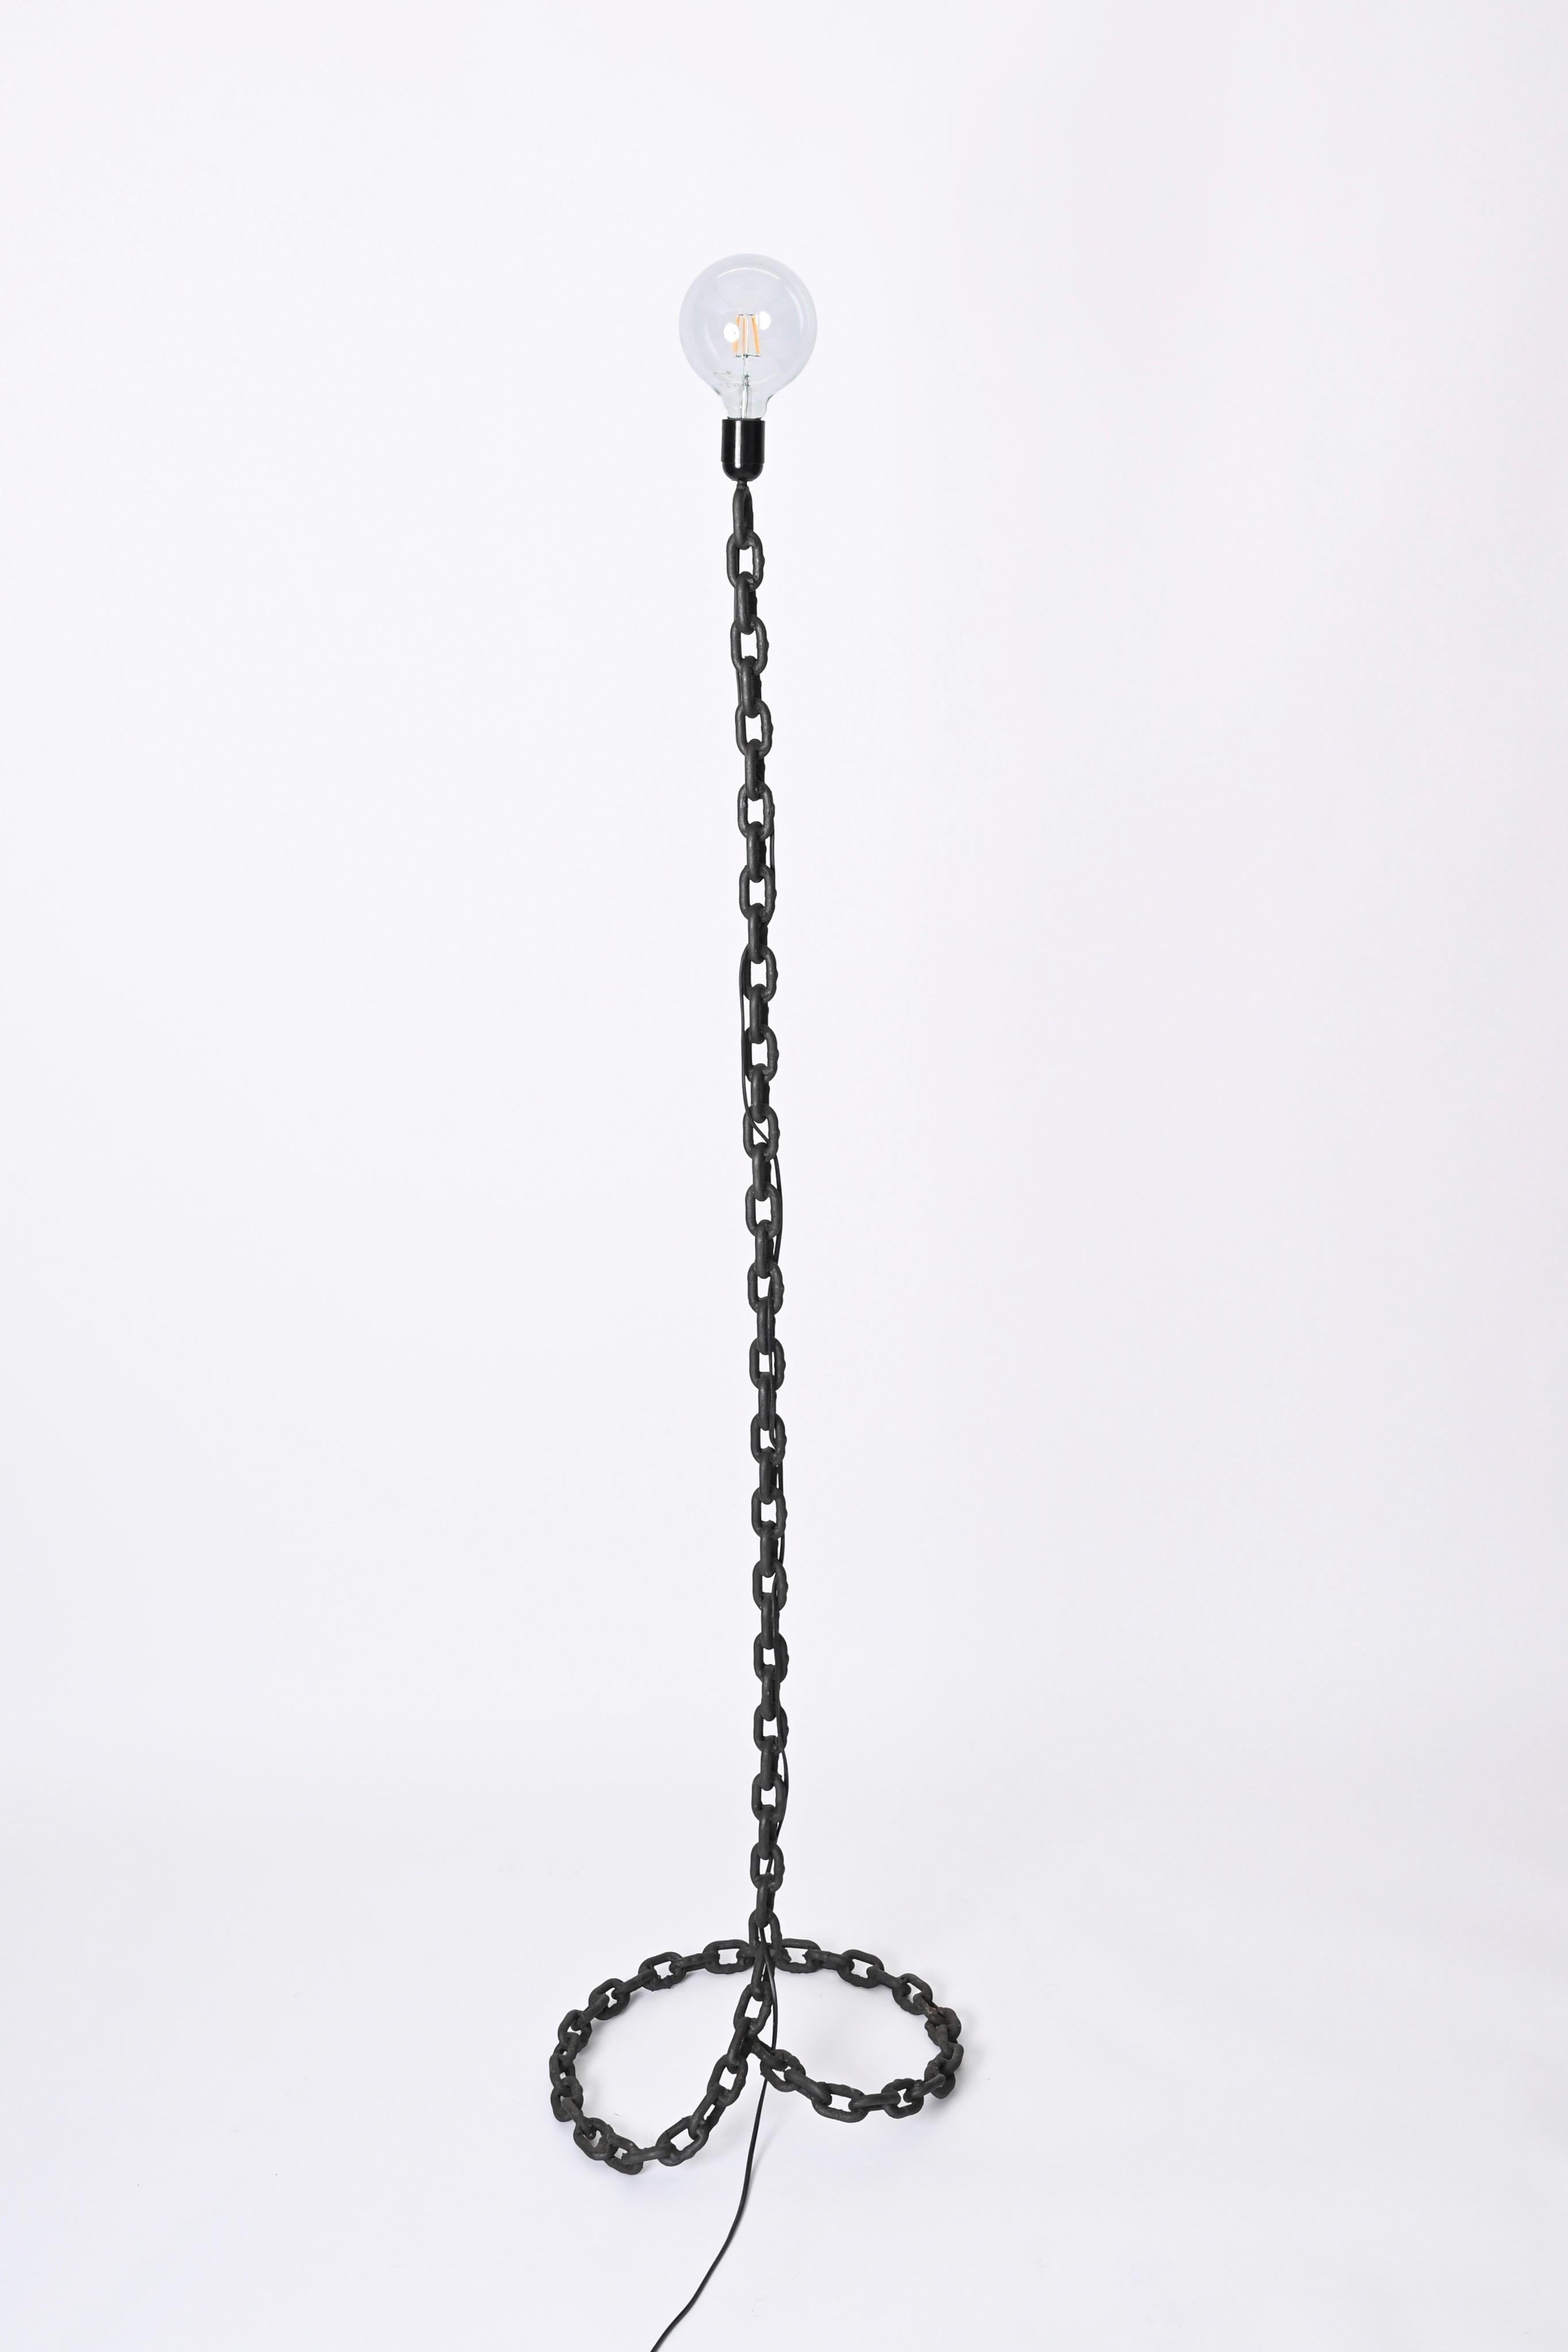 Italian Franz West Brutalist Midcentury Chain Floor Lamp, Italy 1970s  For Sale